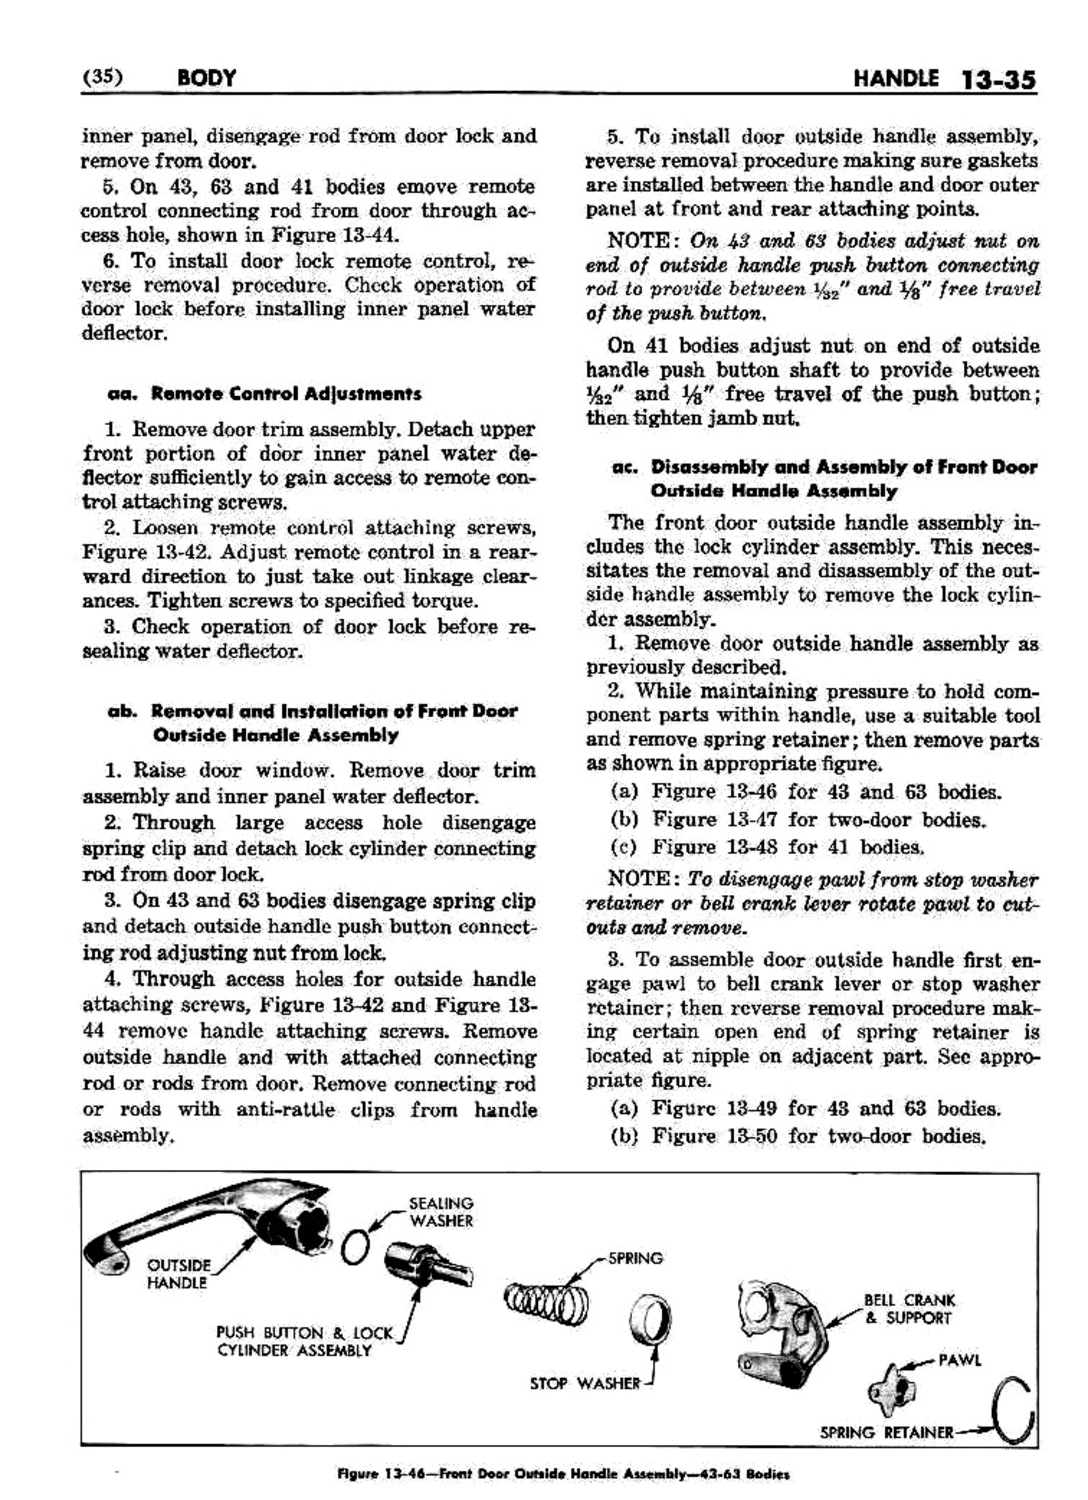 n_1958 Buick Body Service Manual-036-036.jpg